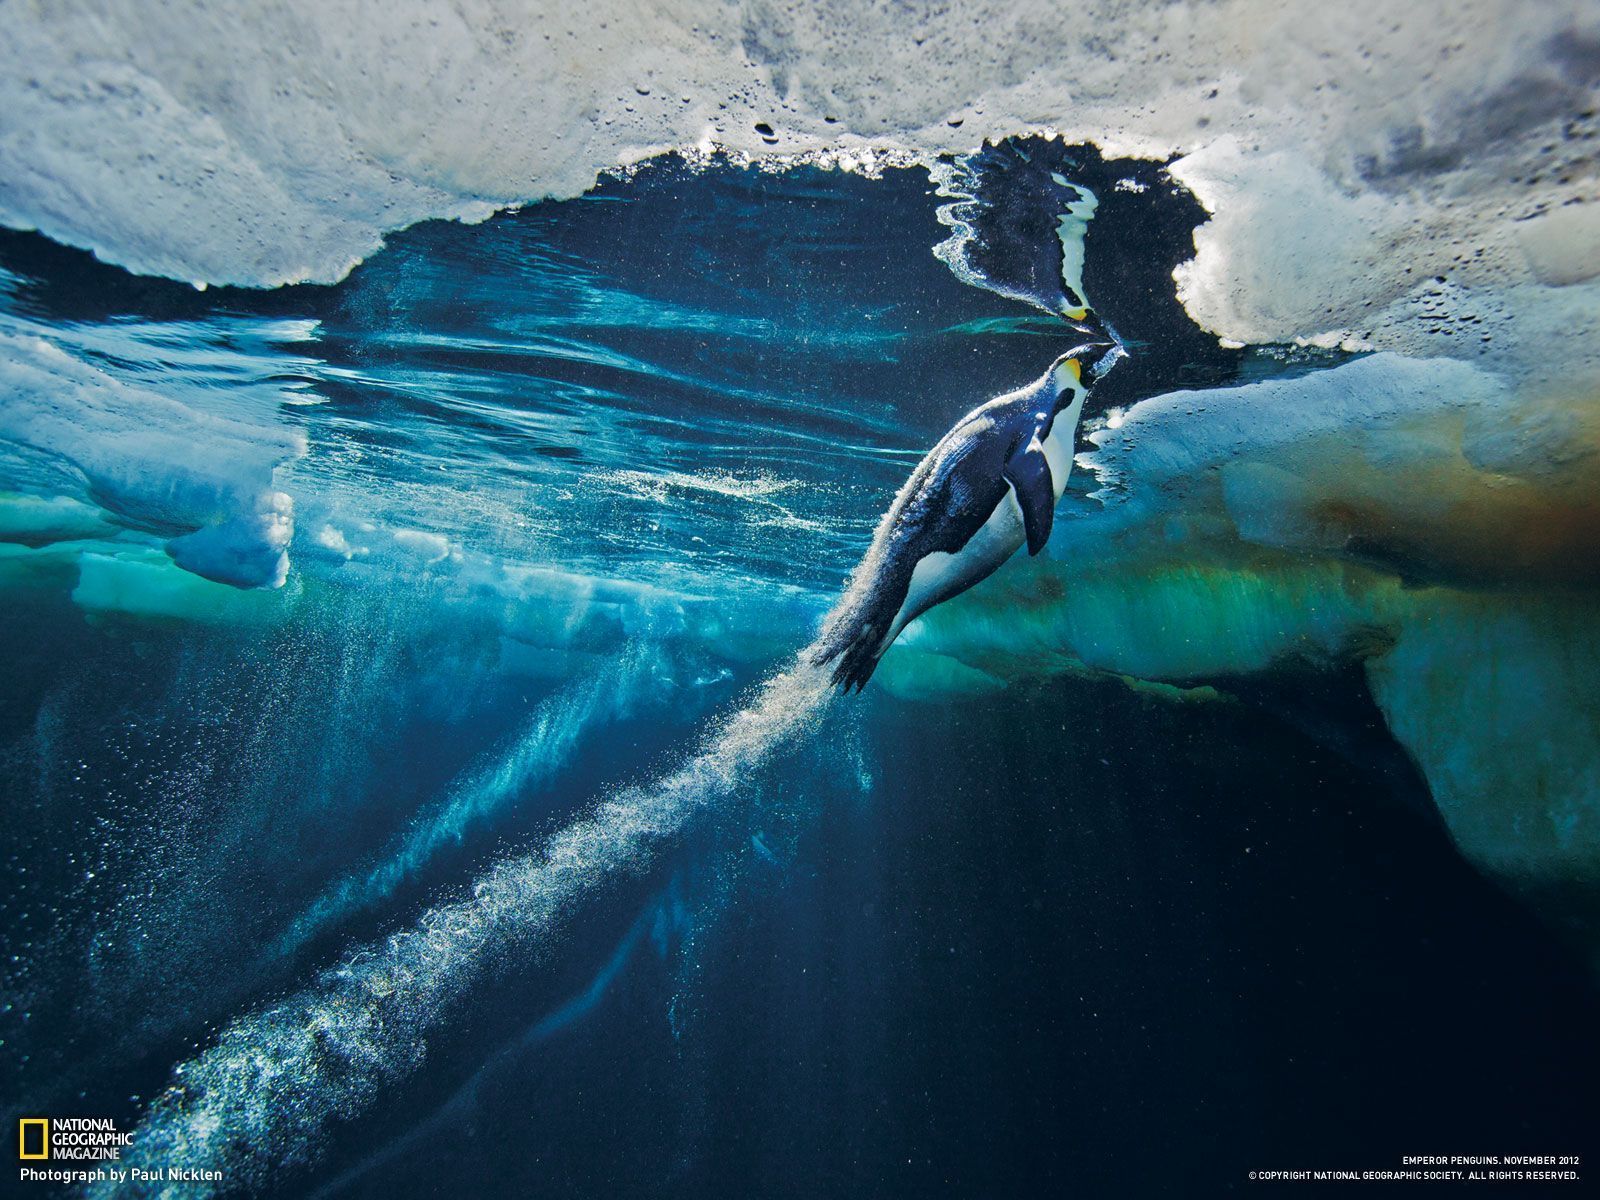 Emperor Penguins Swimming - wallpaper.